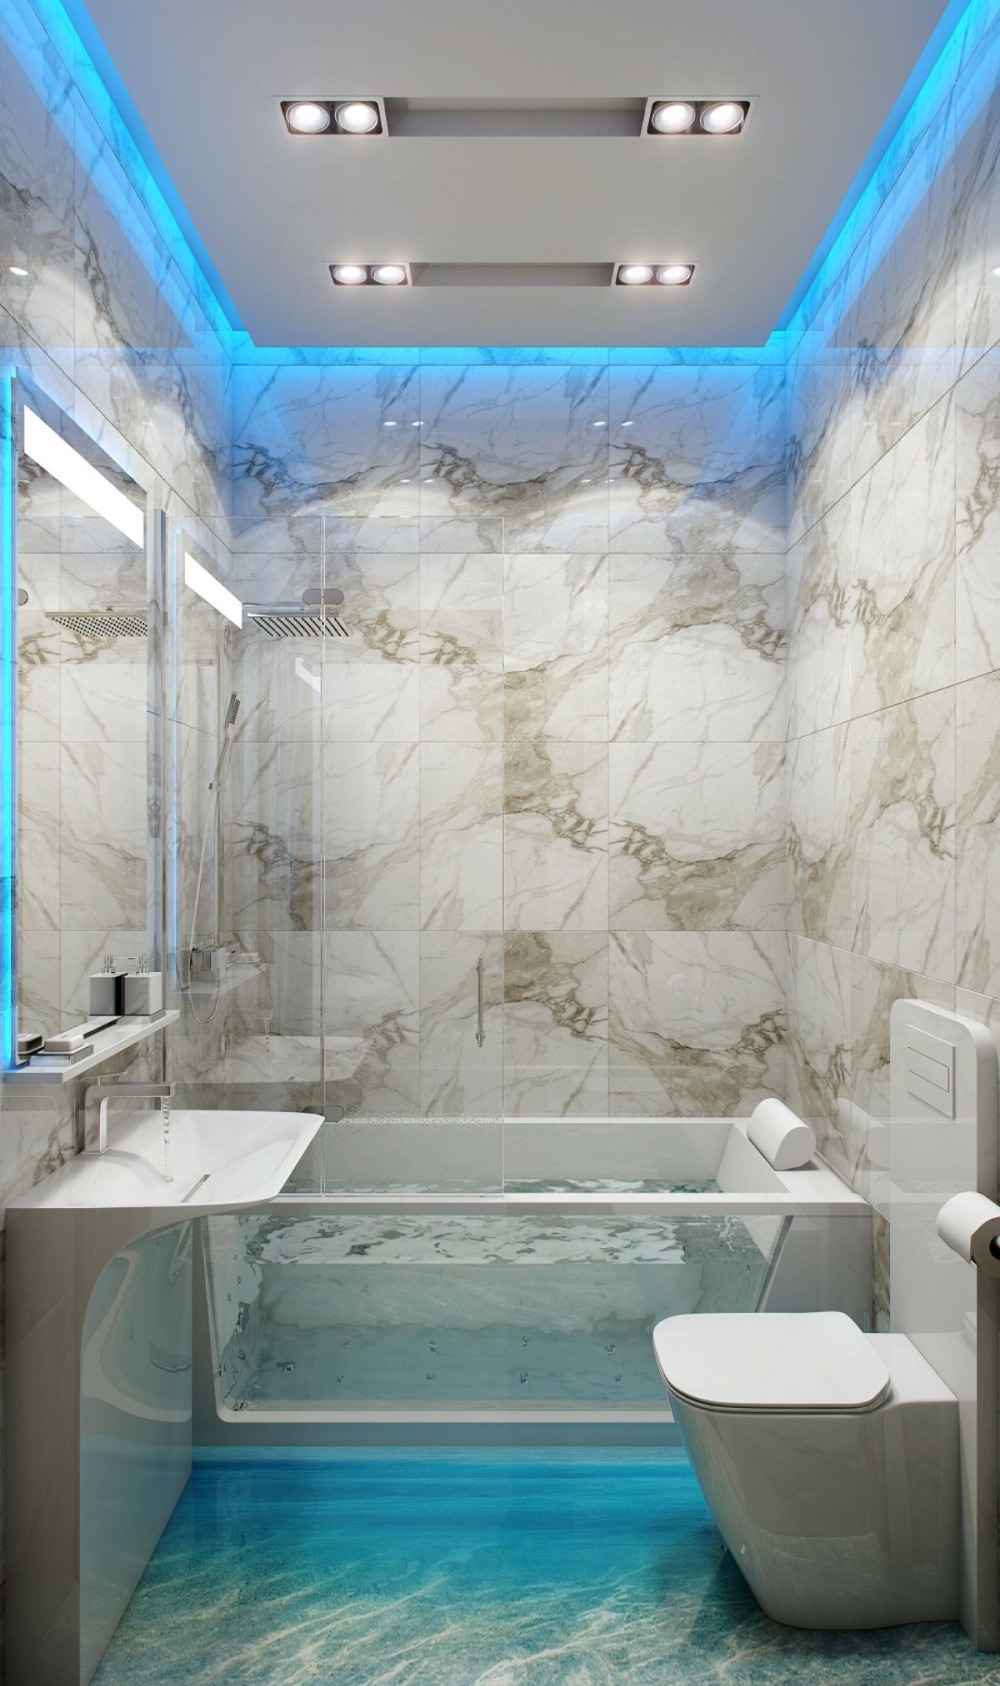 braided bathtubs indirect blue light ceiling lighting transparent